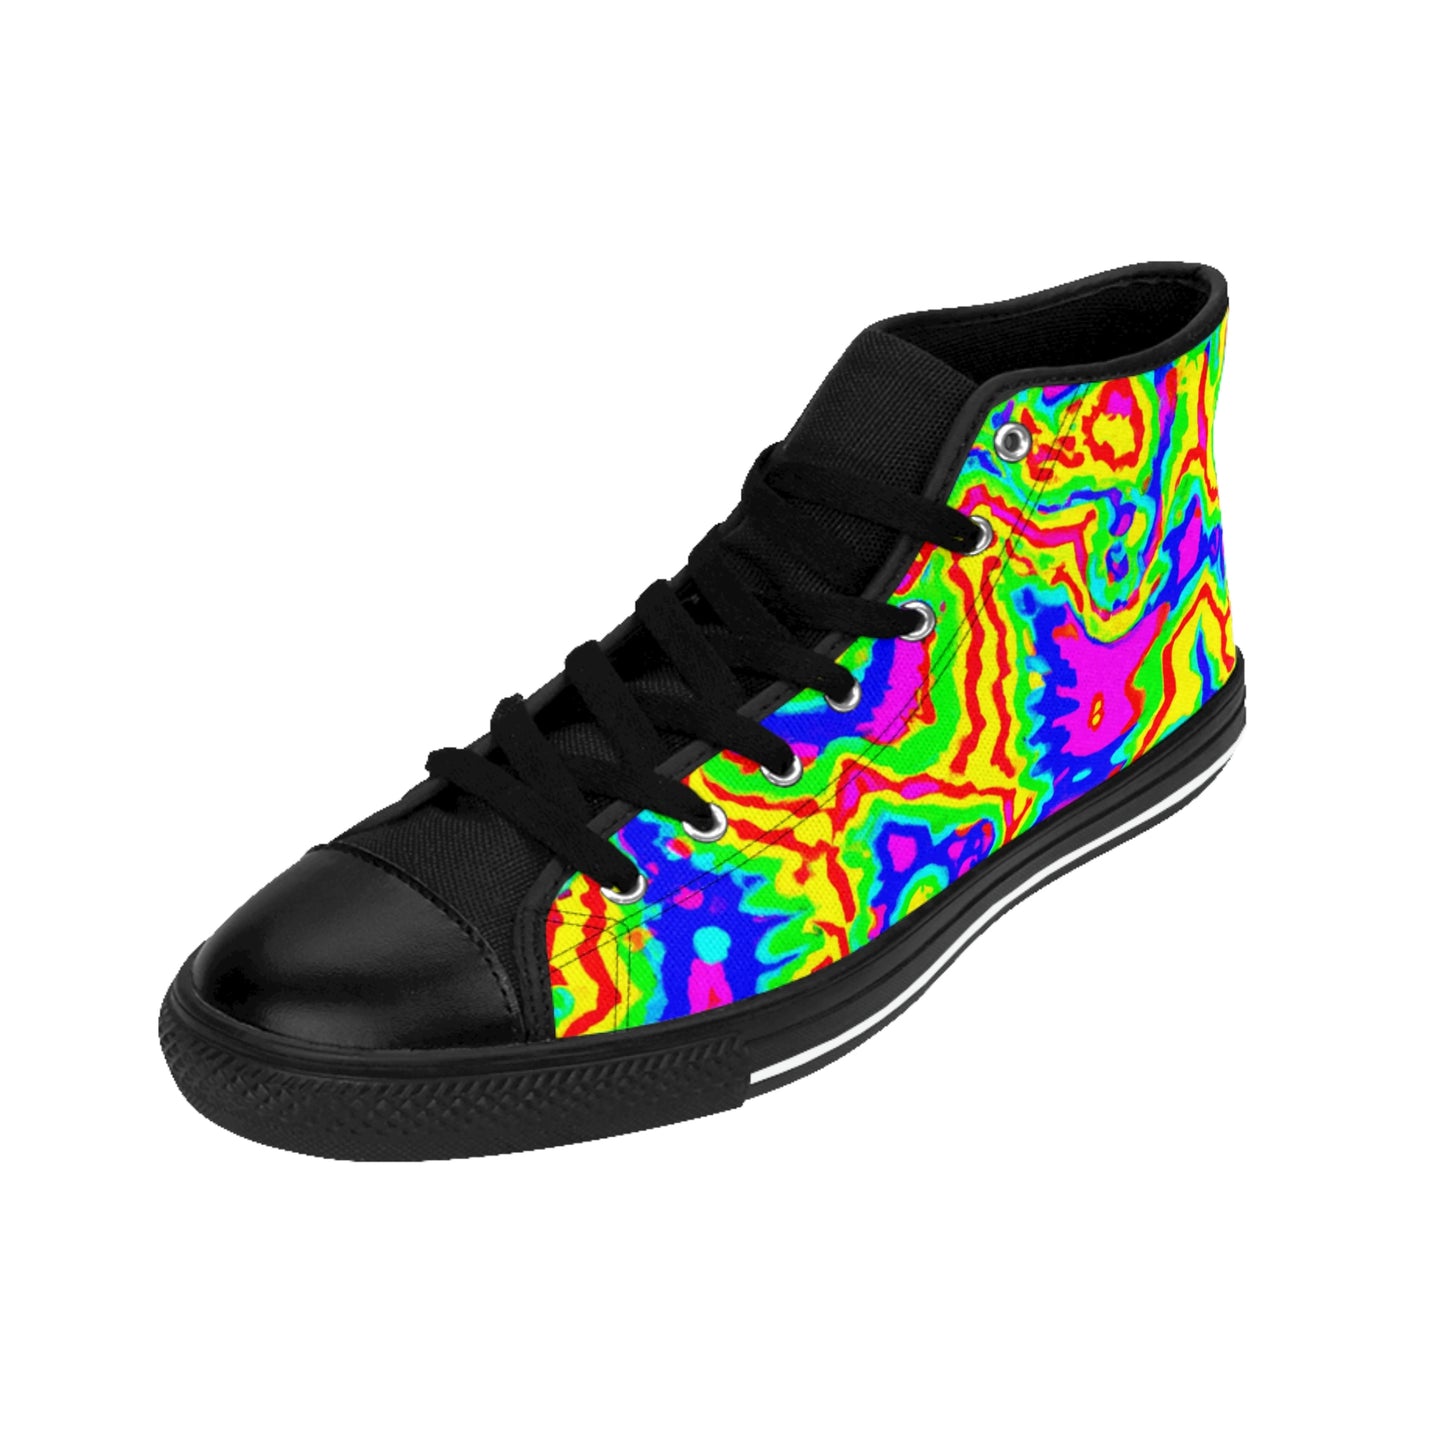 Aldrik the Footwear Maker - Psychedelic Hi Tops